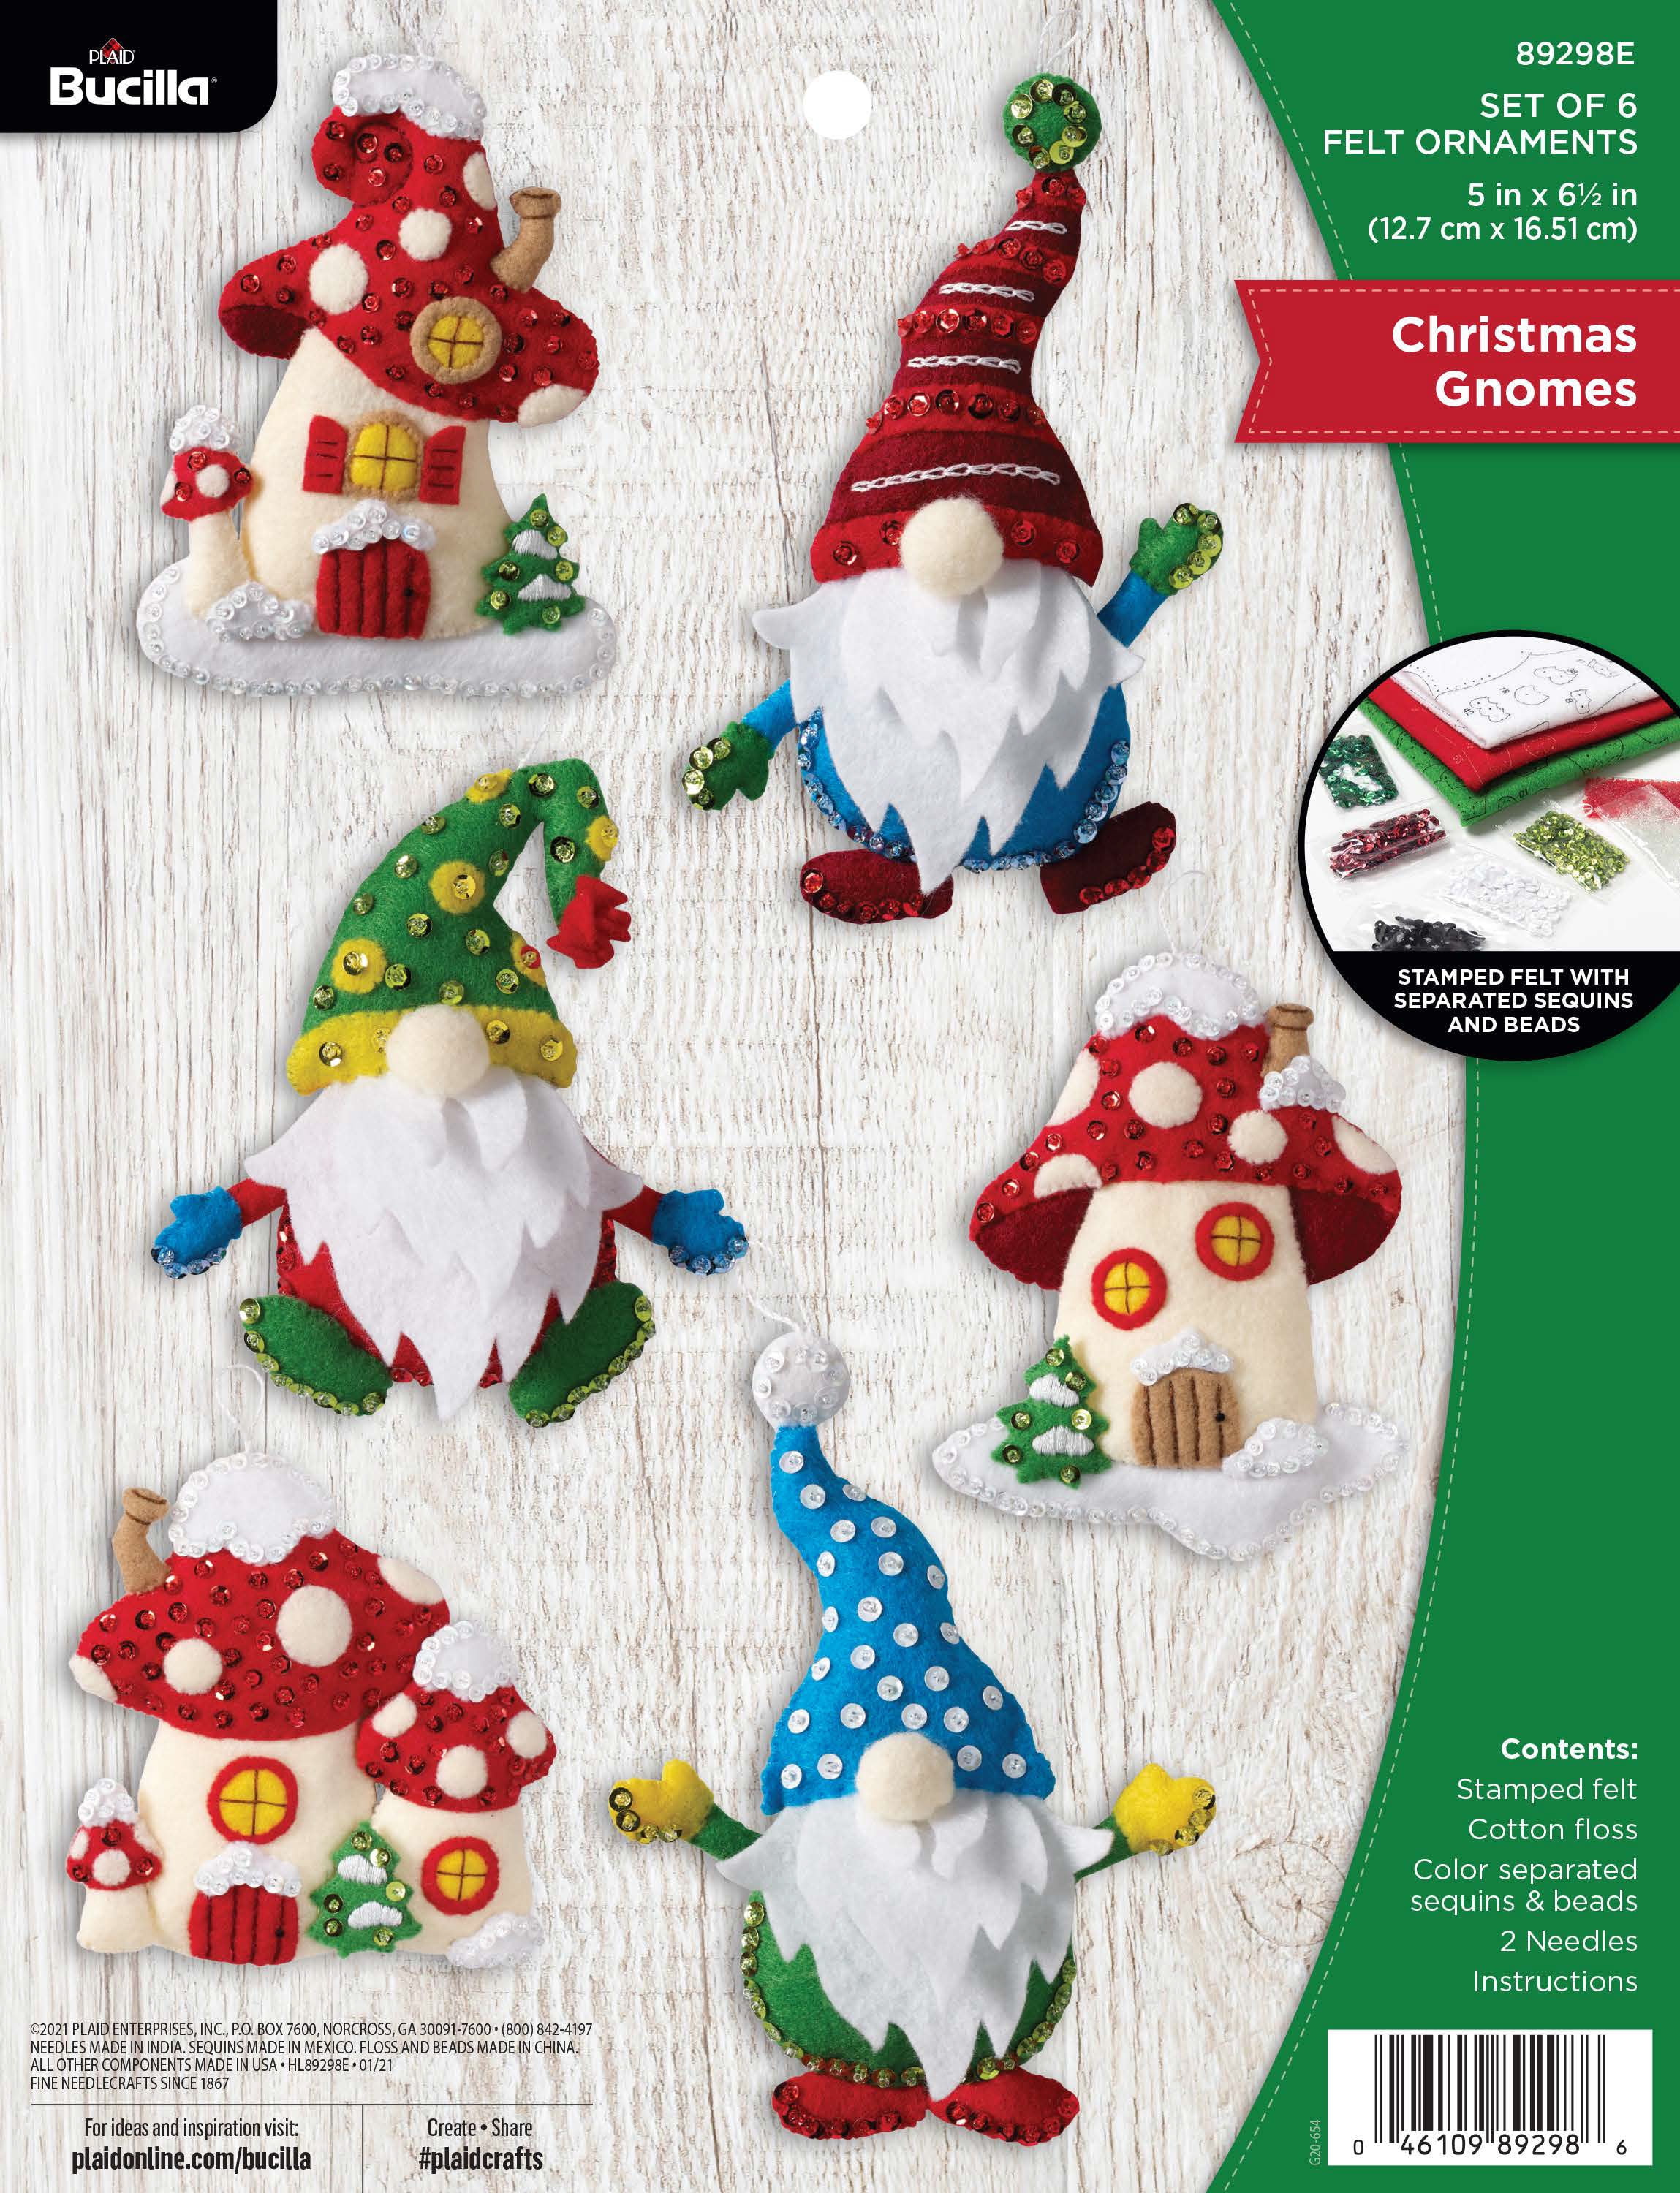 Bucilla Felt Ornaments Applique Kit Set of 6 - Christmas Gnomes